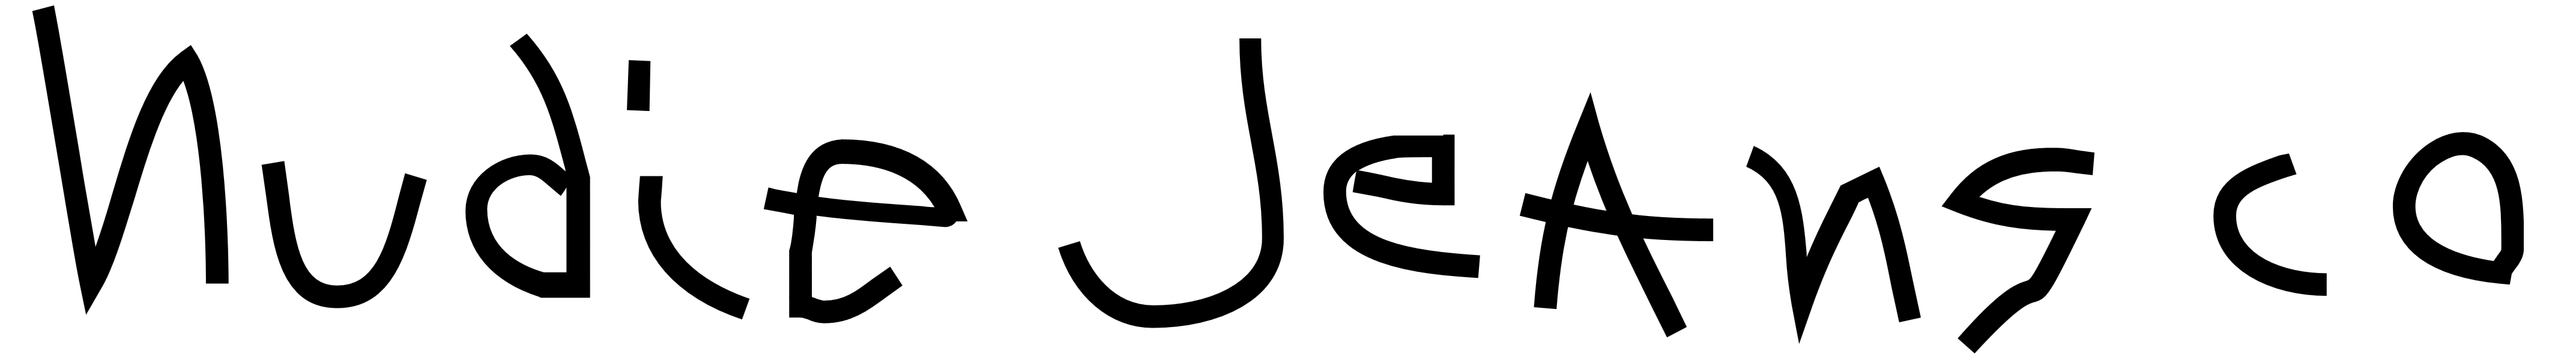 Nudie Jeans logo, logotype